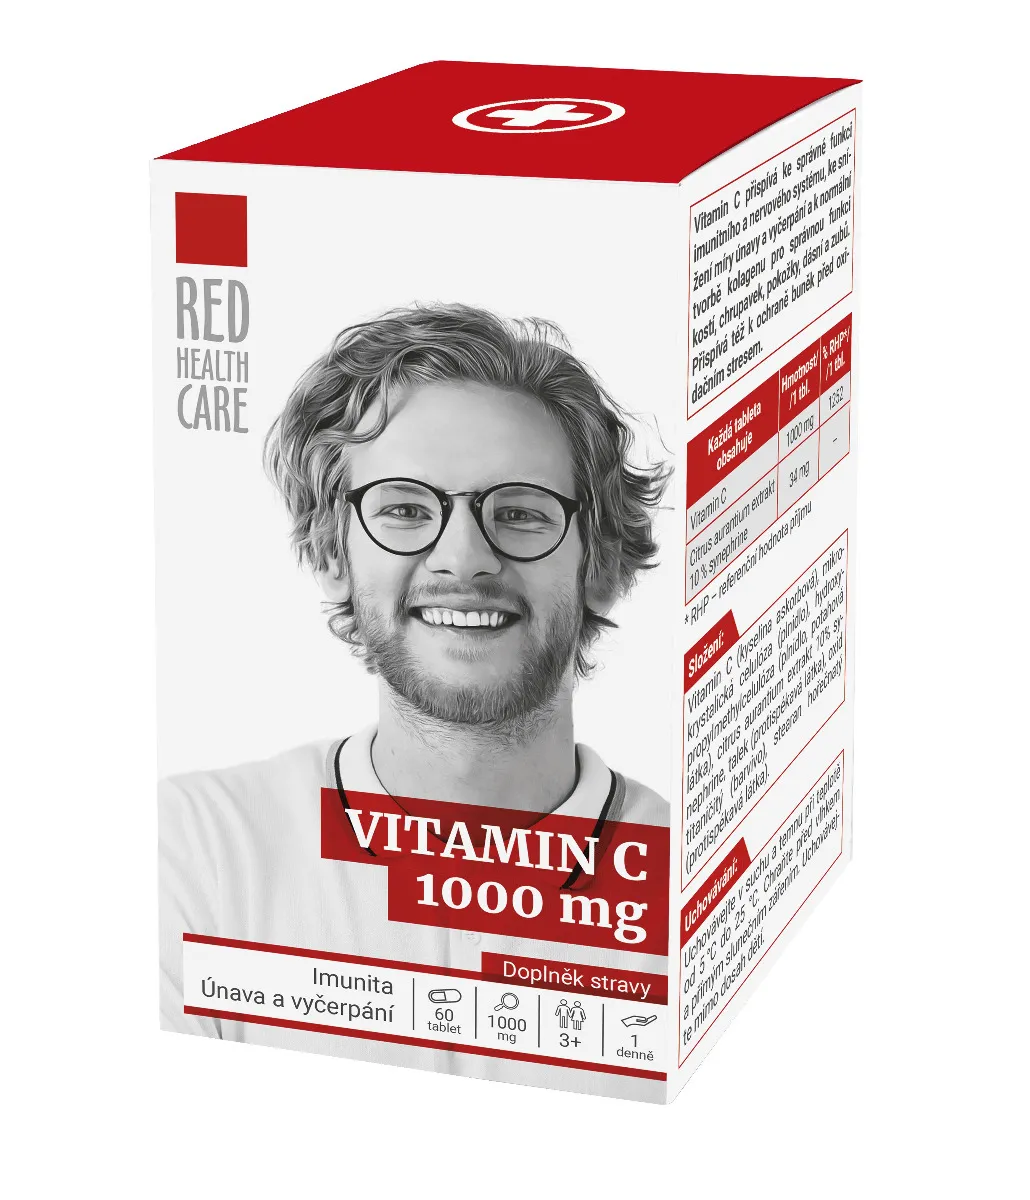 Red health care Vitamin C 1000 mg